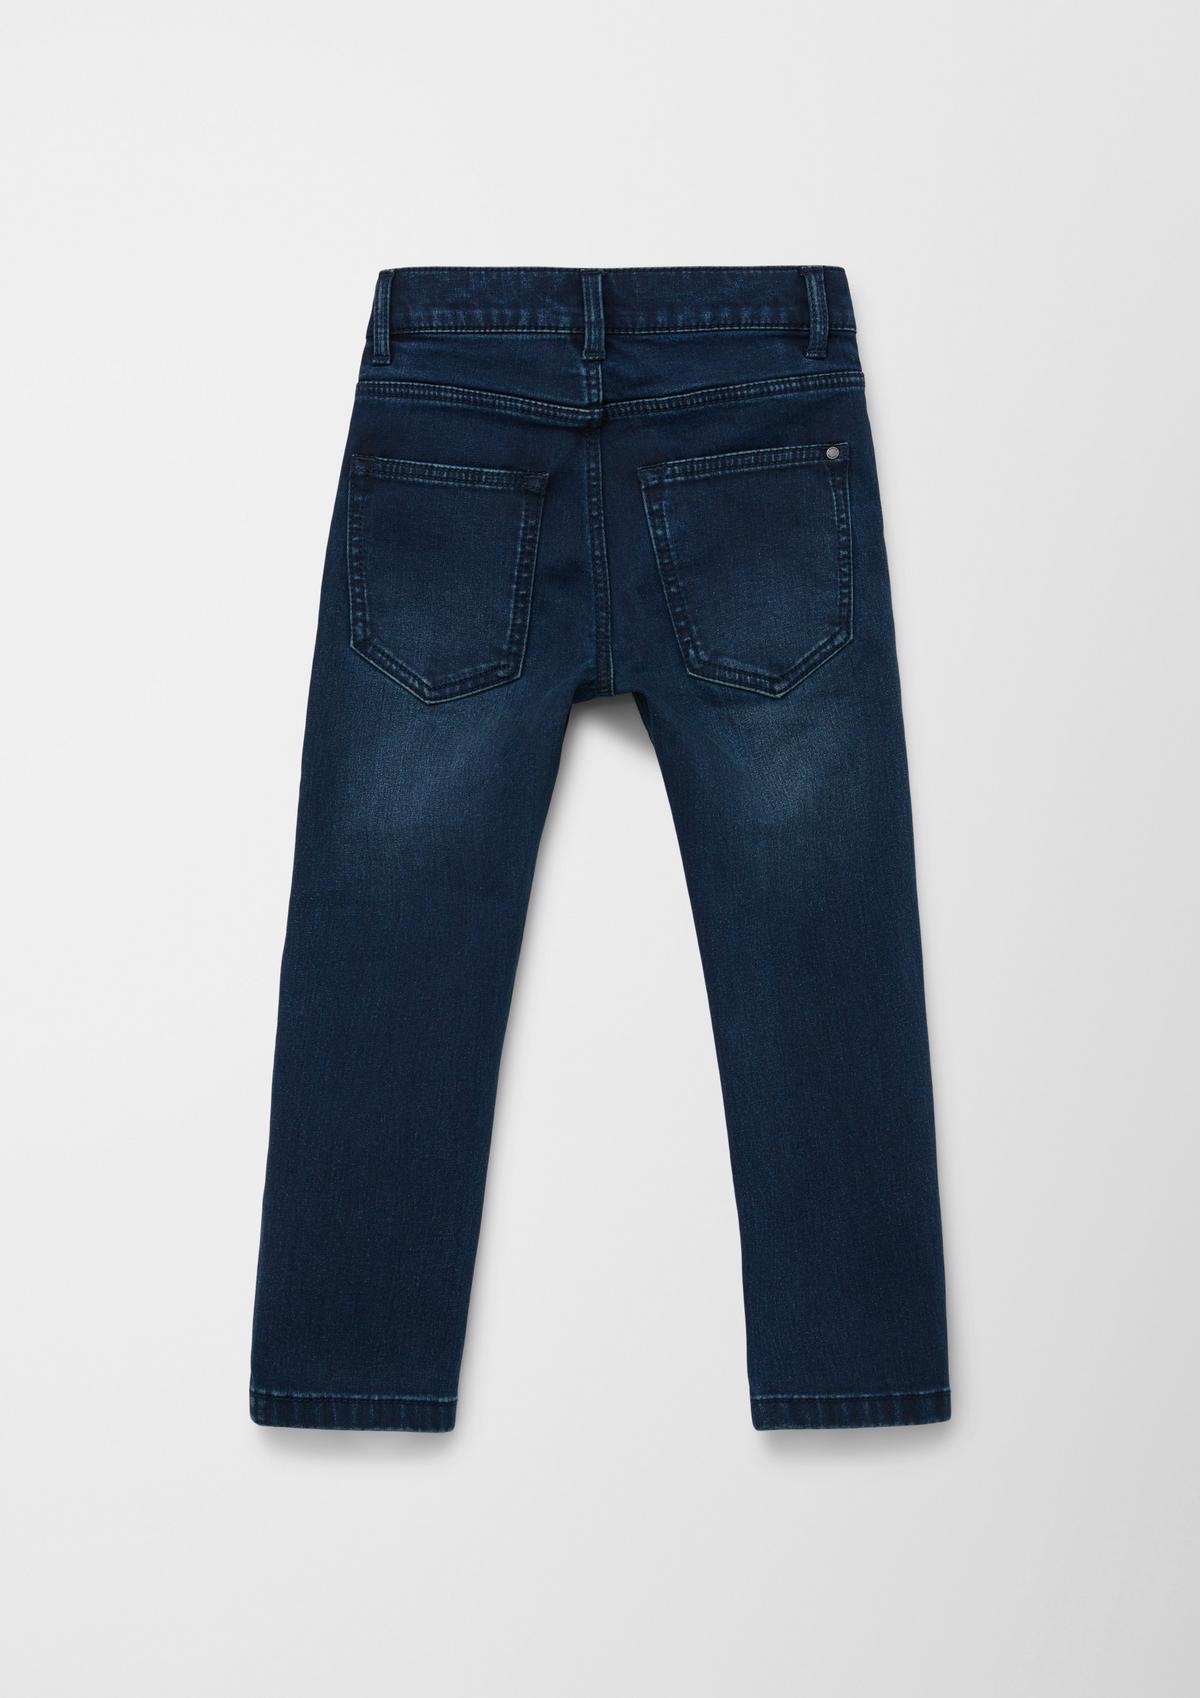 s.Oliver Jeans Pelle / regular fit / mid rise / straight leg / used look